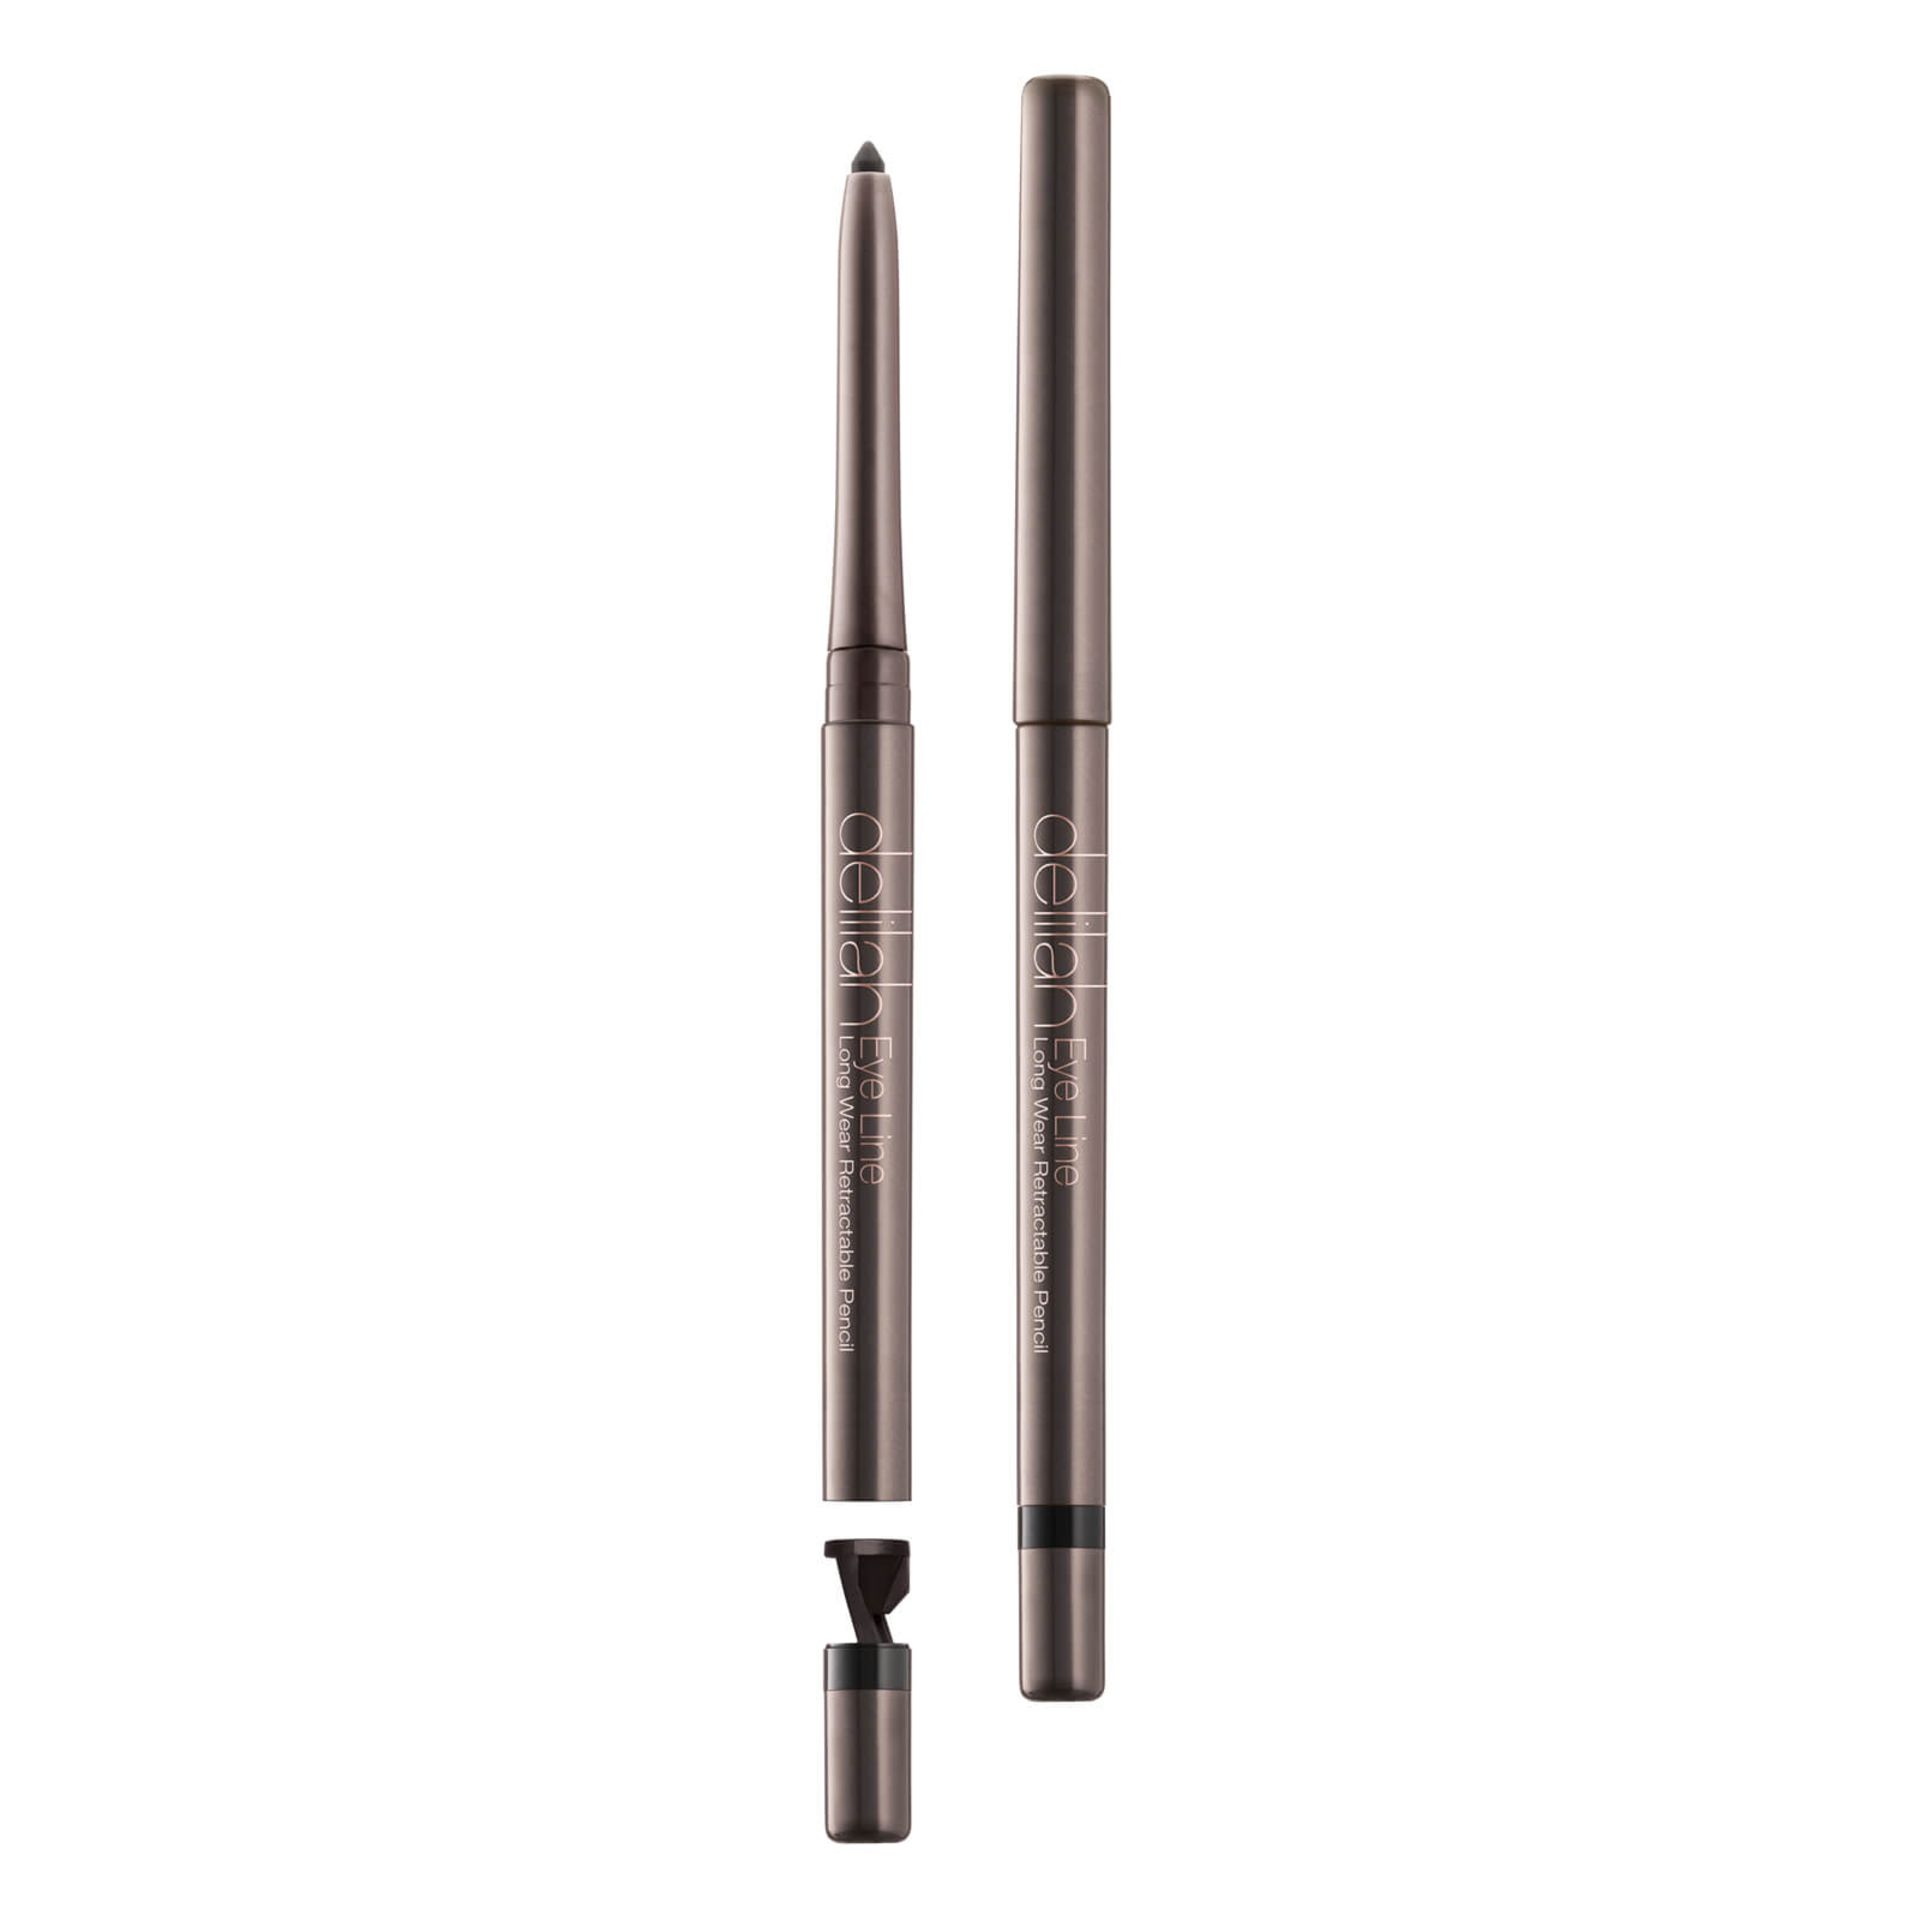 4 x Delilah Long Wear Retractable Eye Pencil - Coal 1401 - RRP£80 - Image 2 of 3